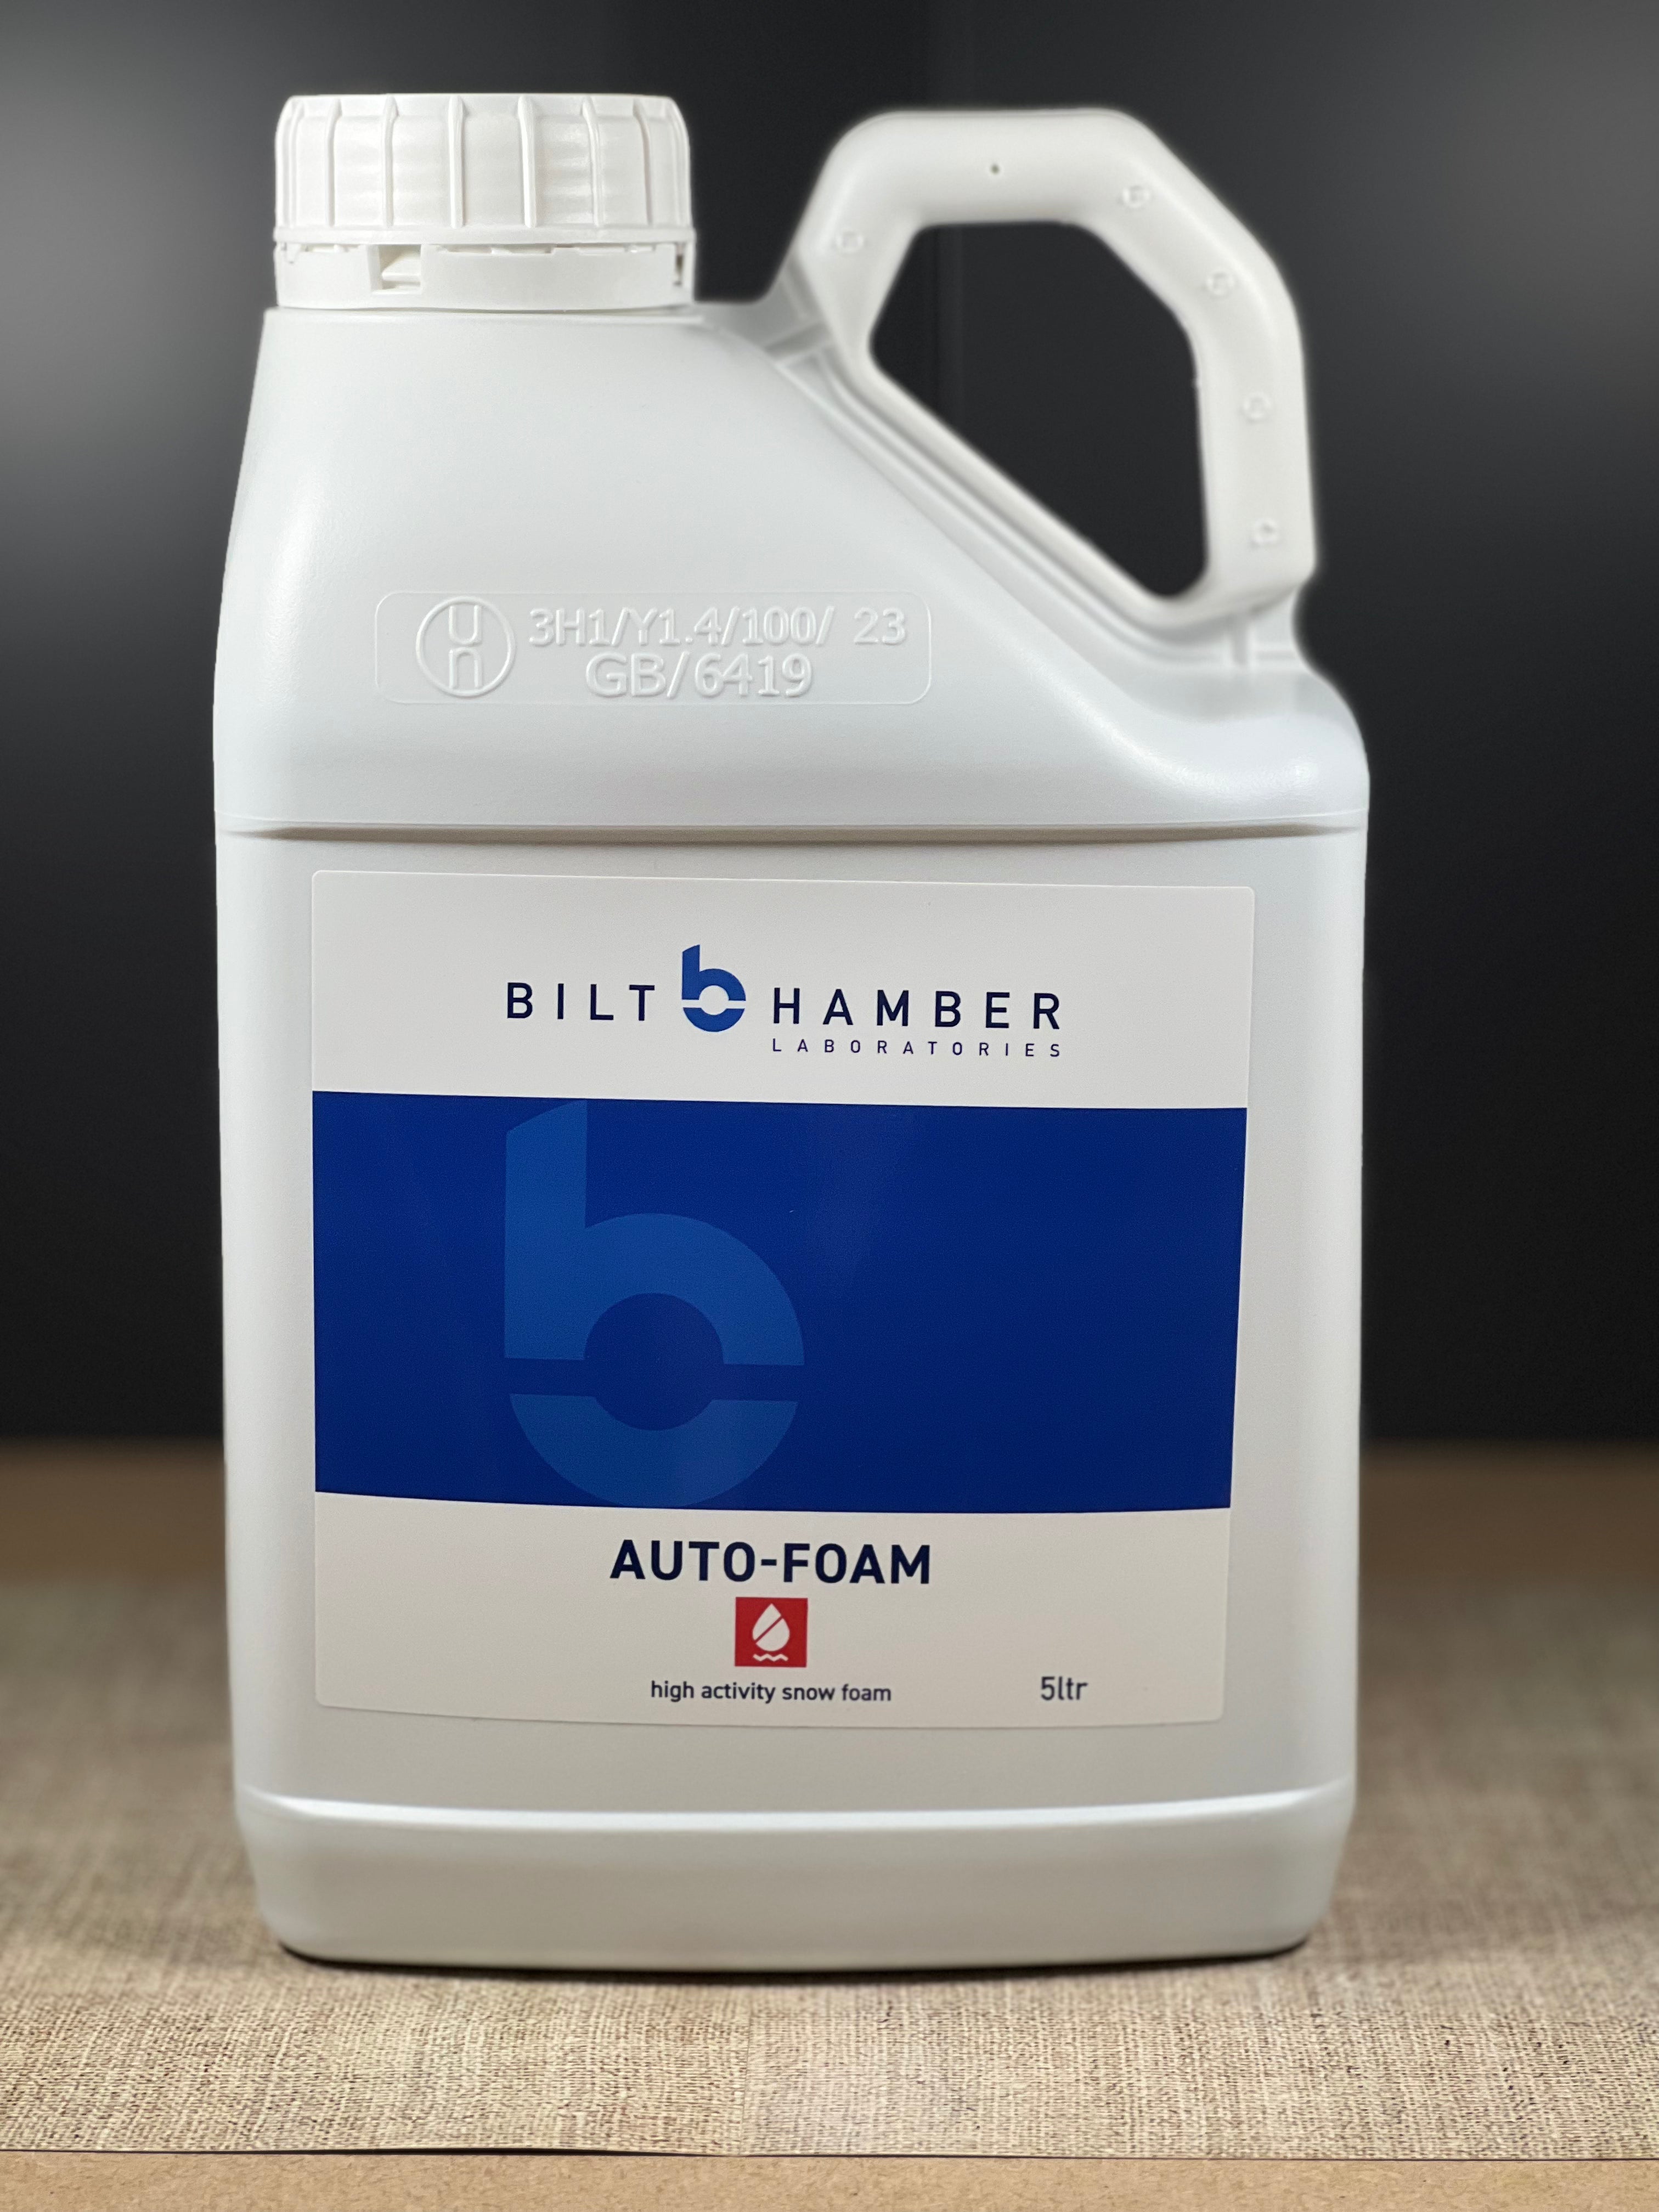 BILT HAMBER AUTO-FOAM PRE-WASH CLEANER - 5 Litre